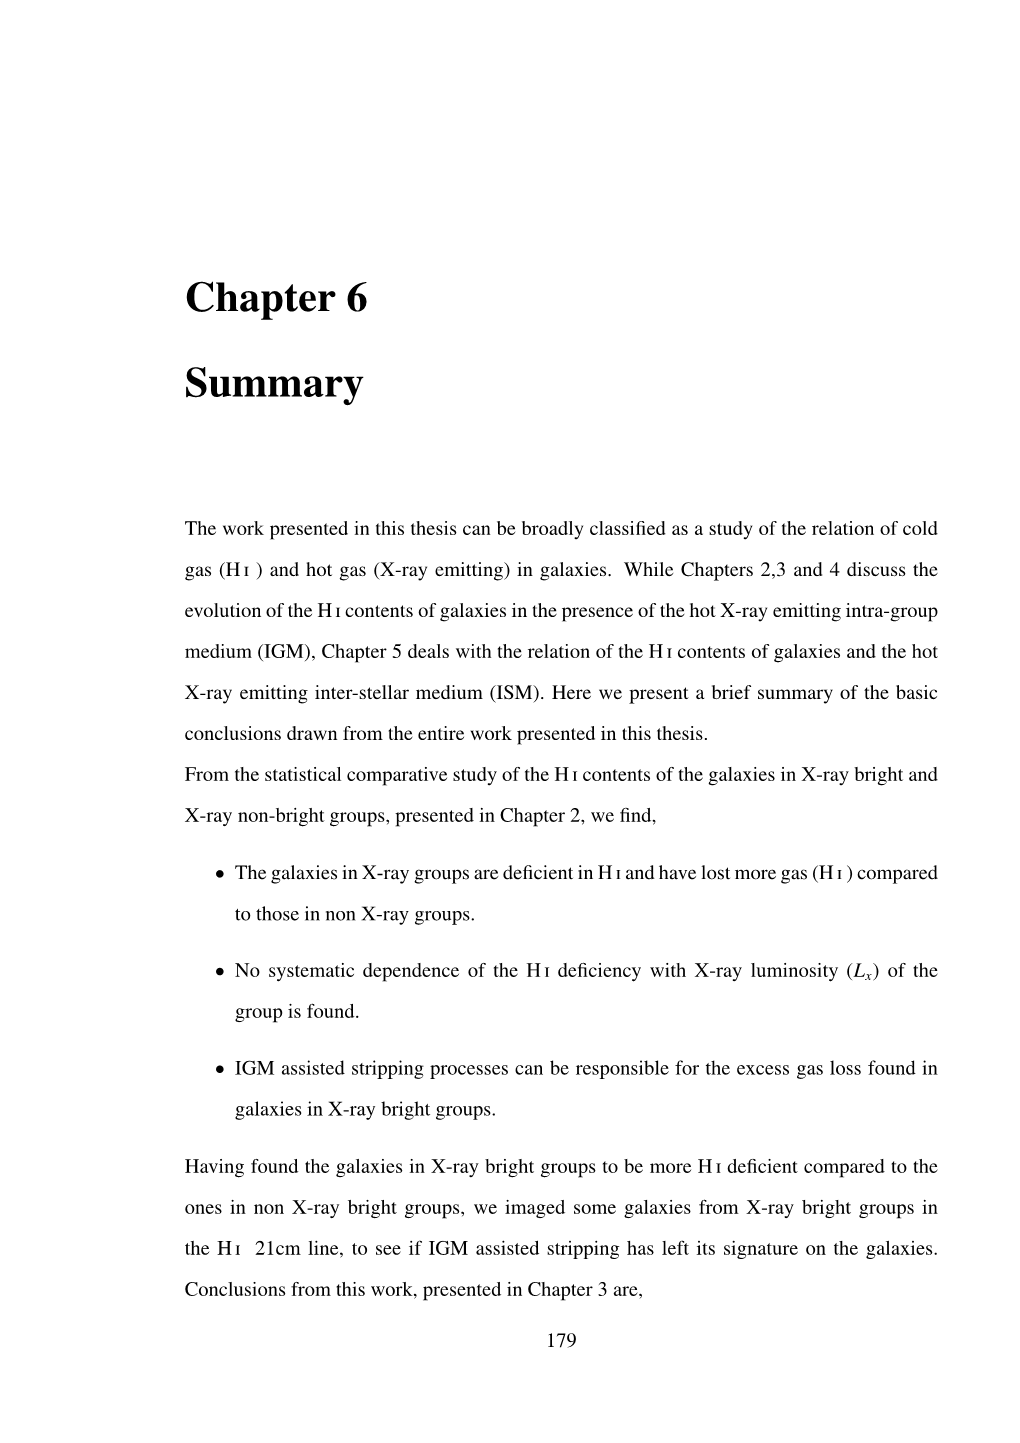 Chapter 6 Summary